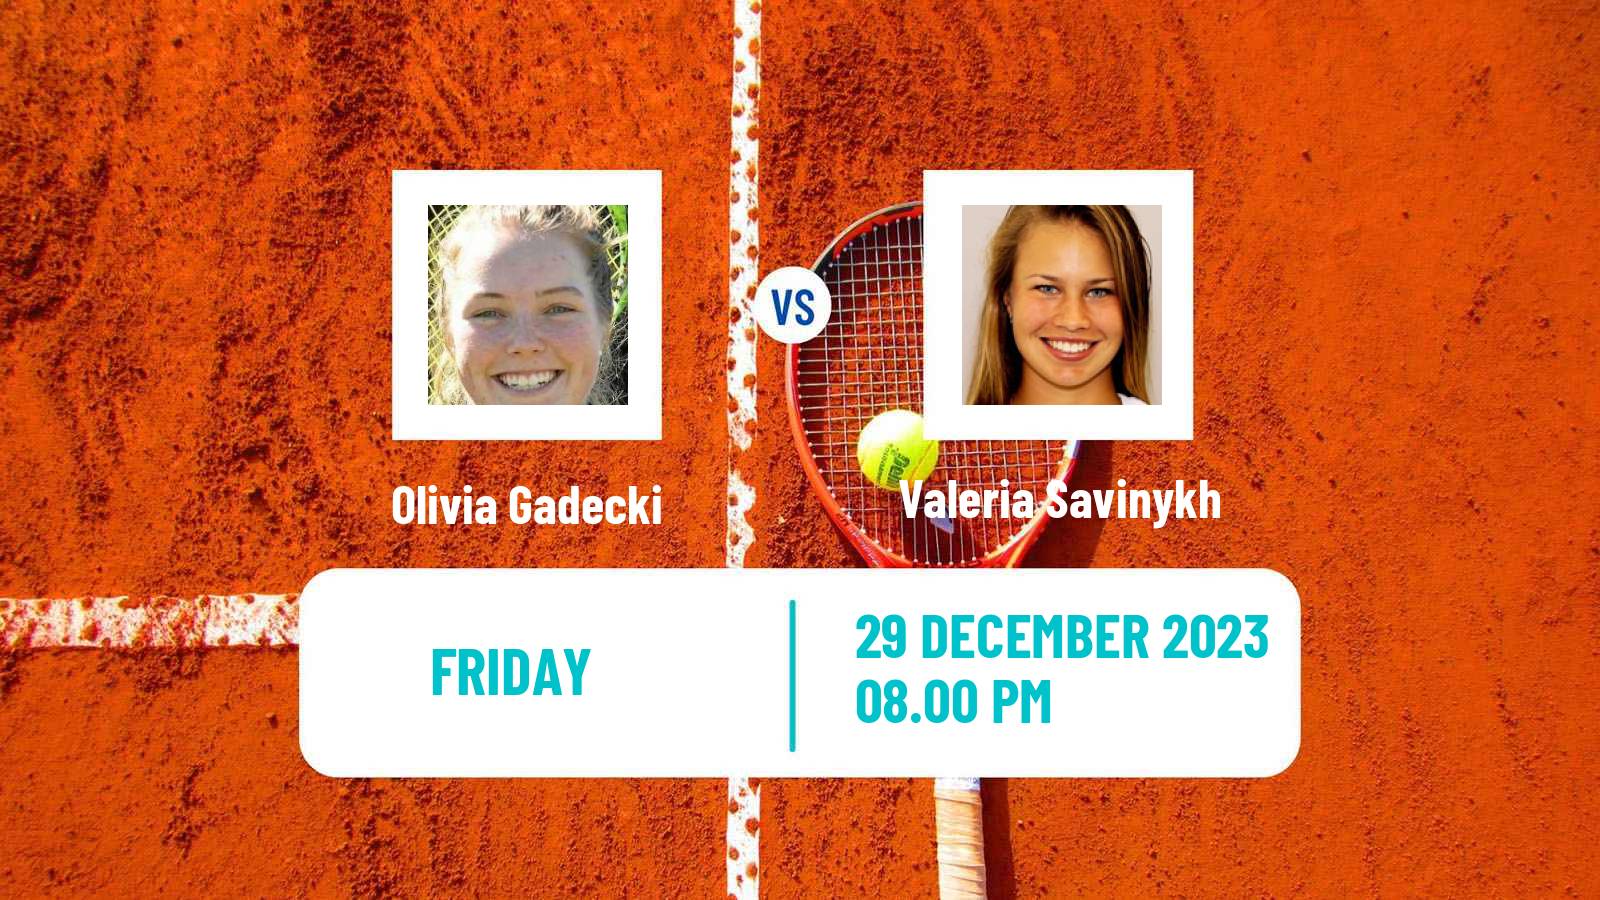 Tennis WTA Brisbane Olivia Gadecki - Valeria Savinykh